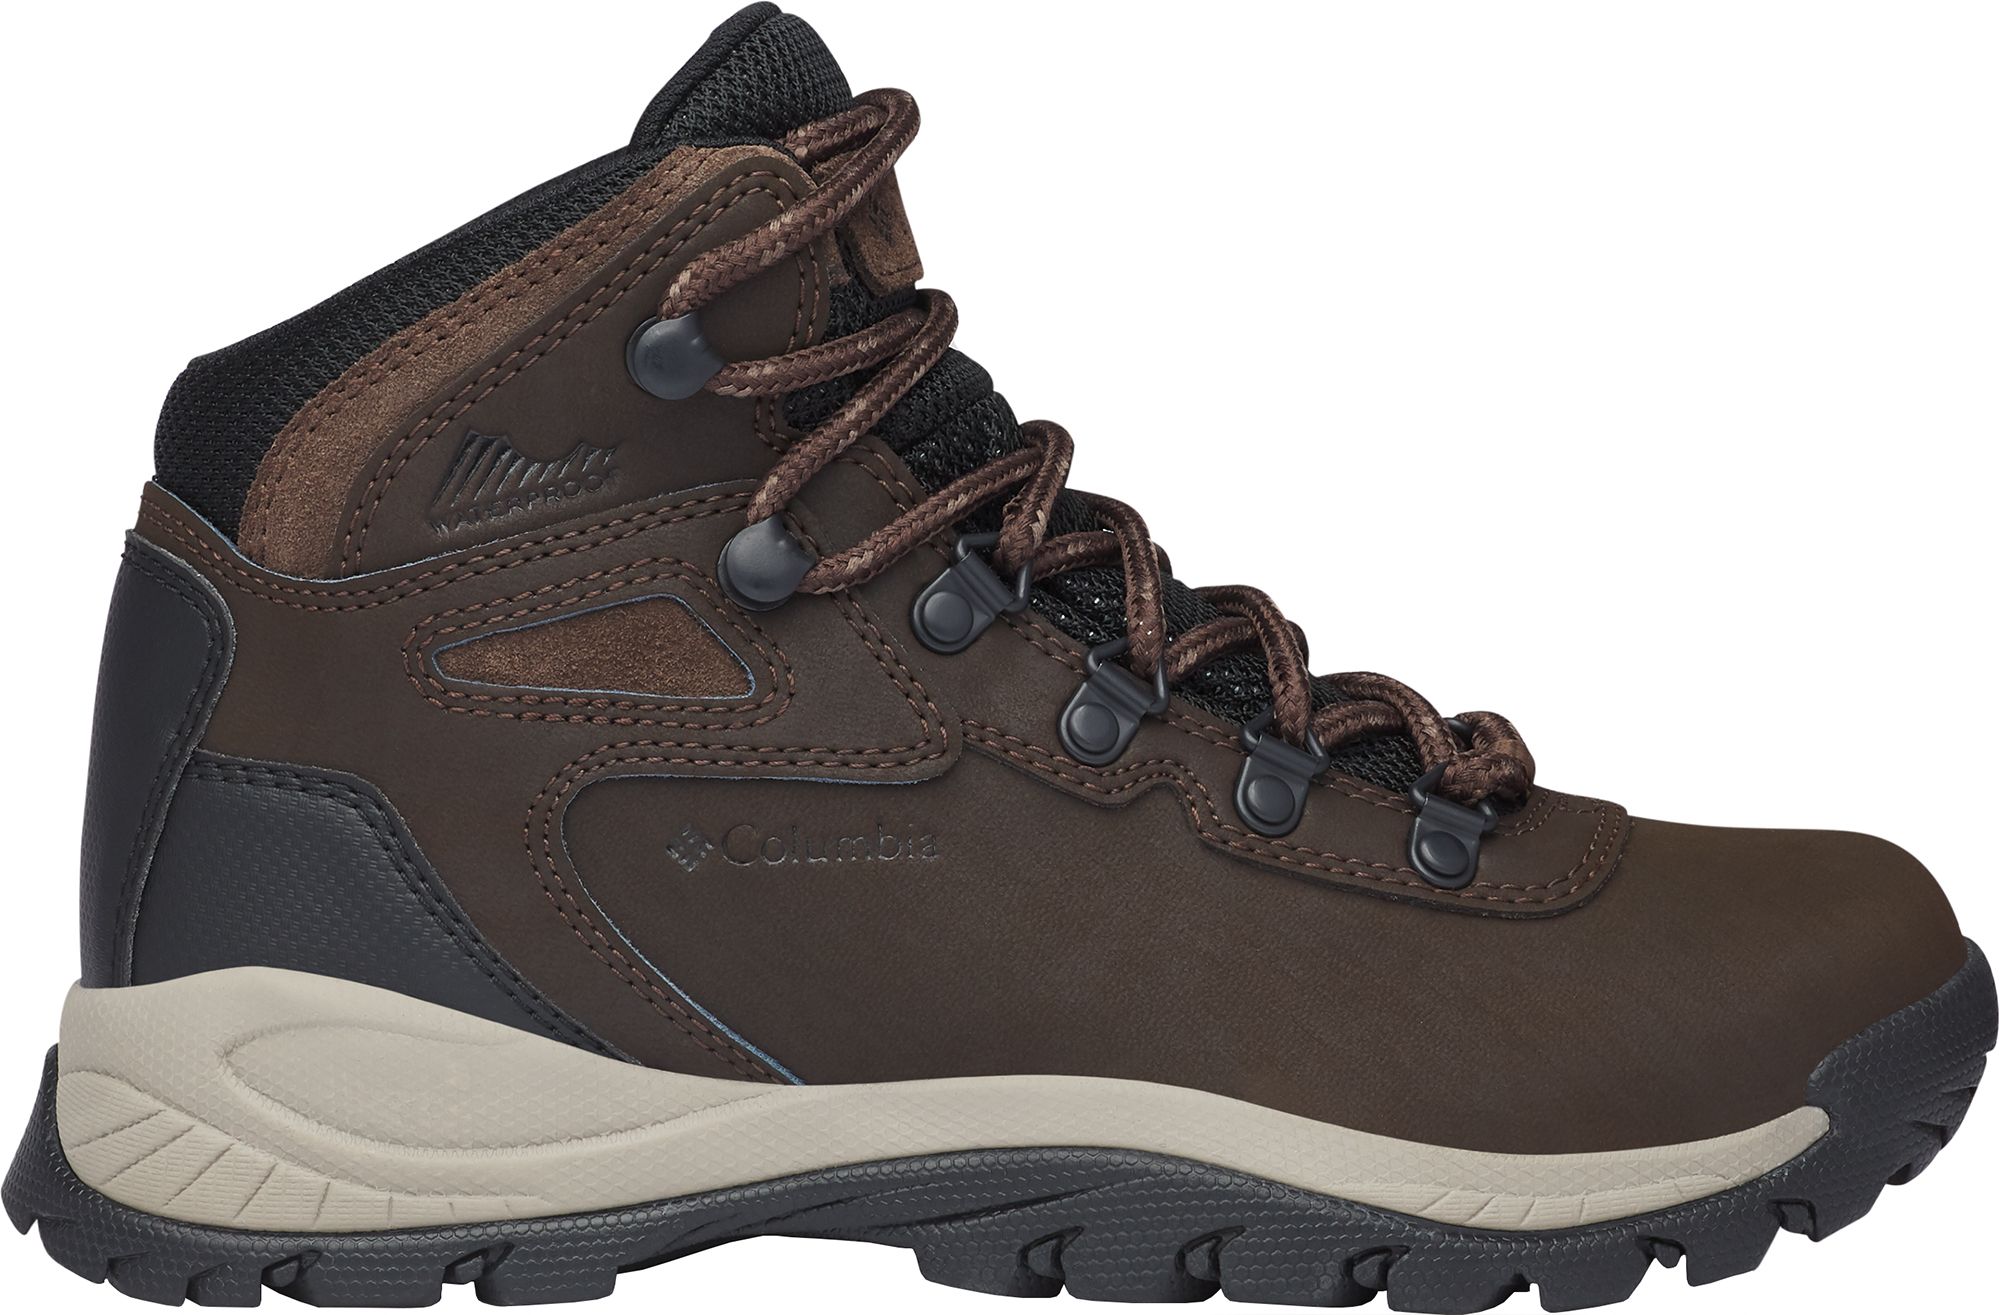 Photos - Trekking Shoes Columbia Women's Newton Ridge Plus Mid Waterproof Hiking Boots, Size 7, Co 